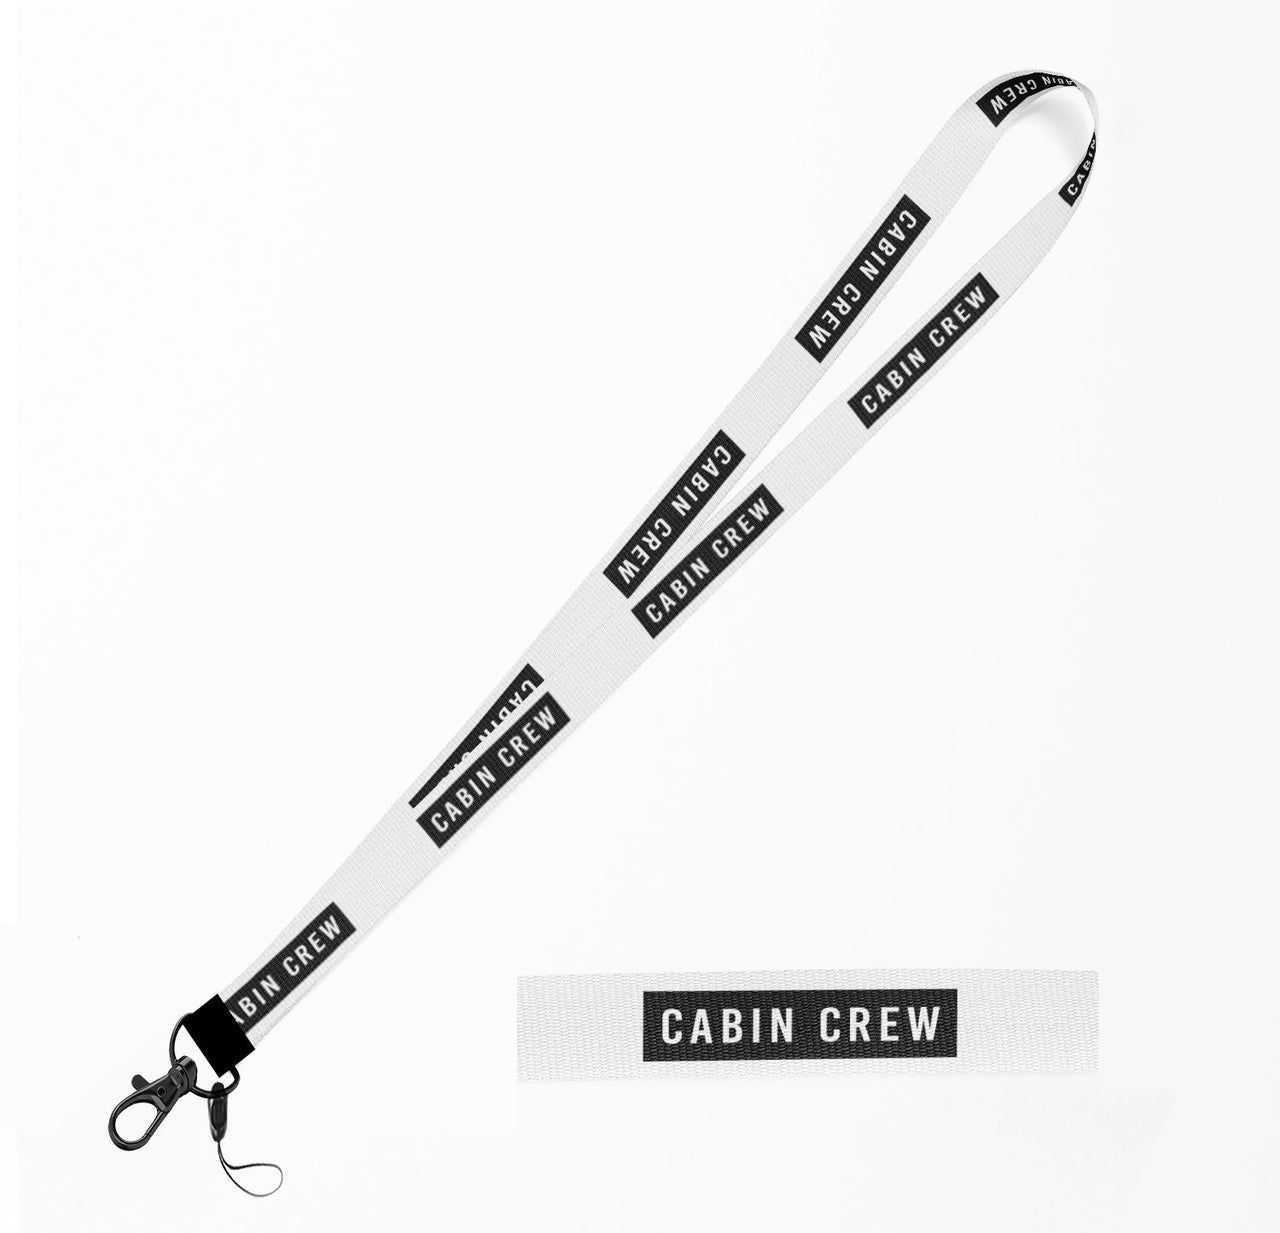 Cabin Crew Text Designed Lanyard & ID Holders